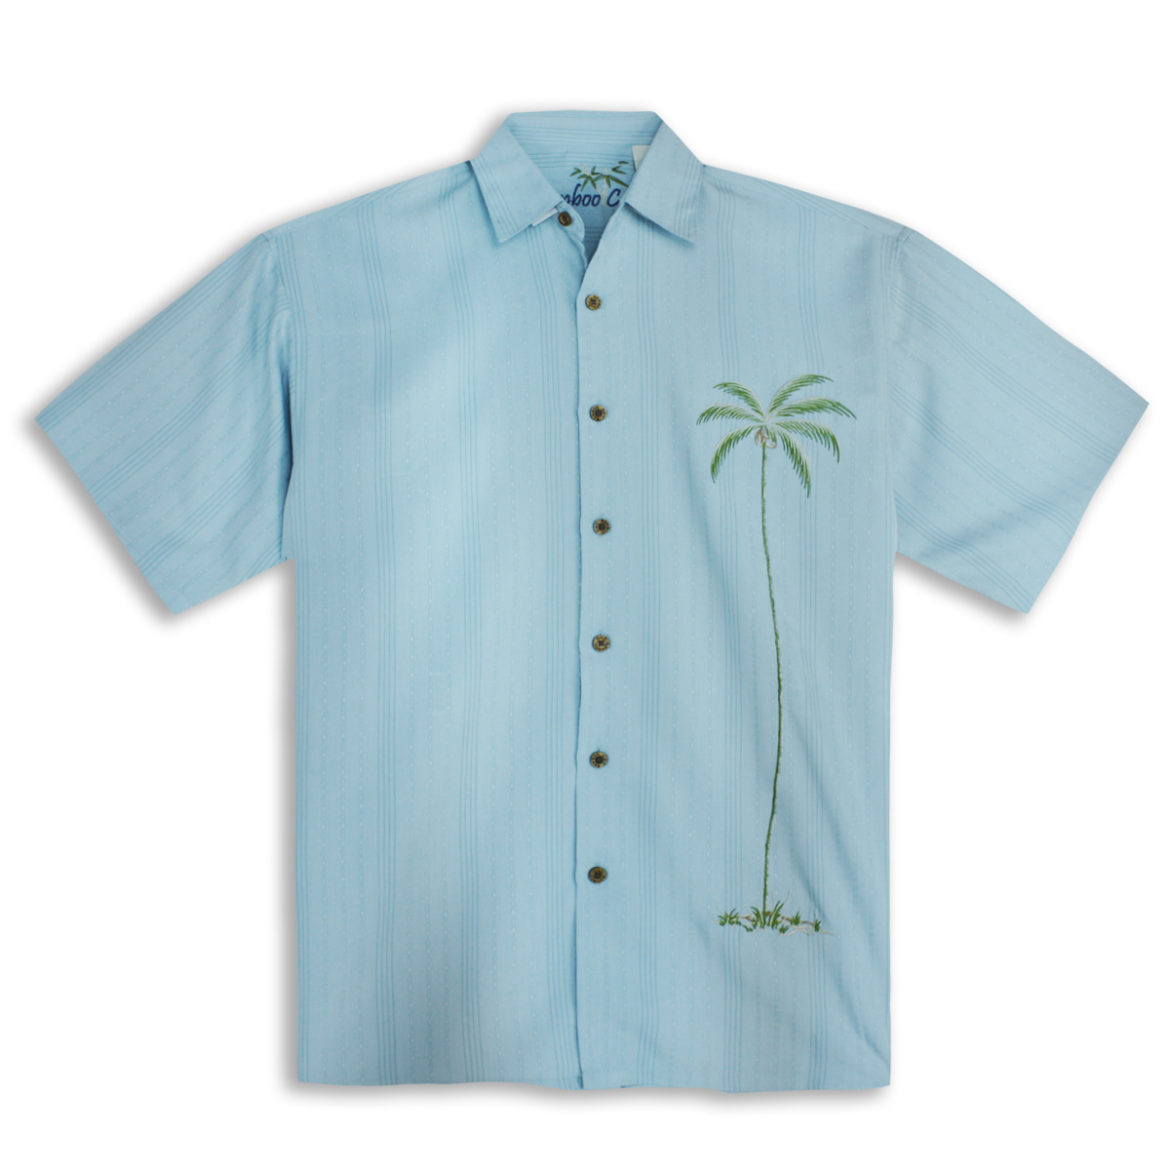 Fine Mens Resortwear Shirt . Bamboo Cay -Tranqulity - Aqua Marine- Easy Care Handsome Island Vacation Shirt.